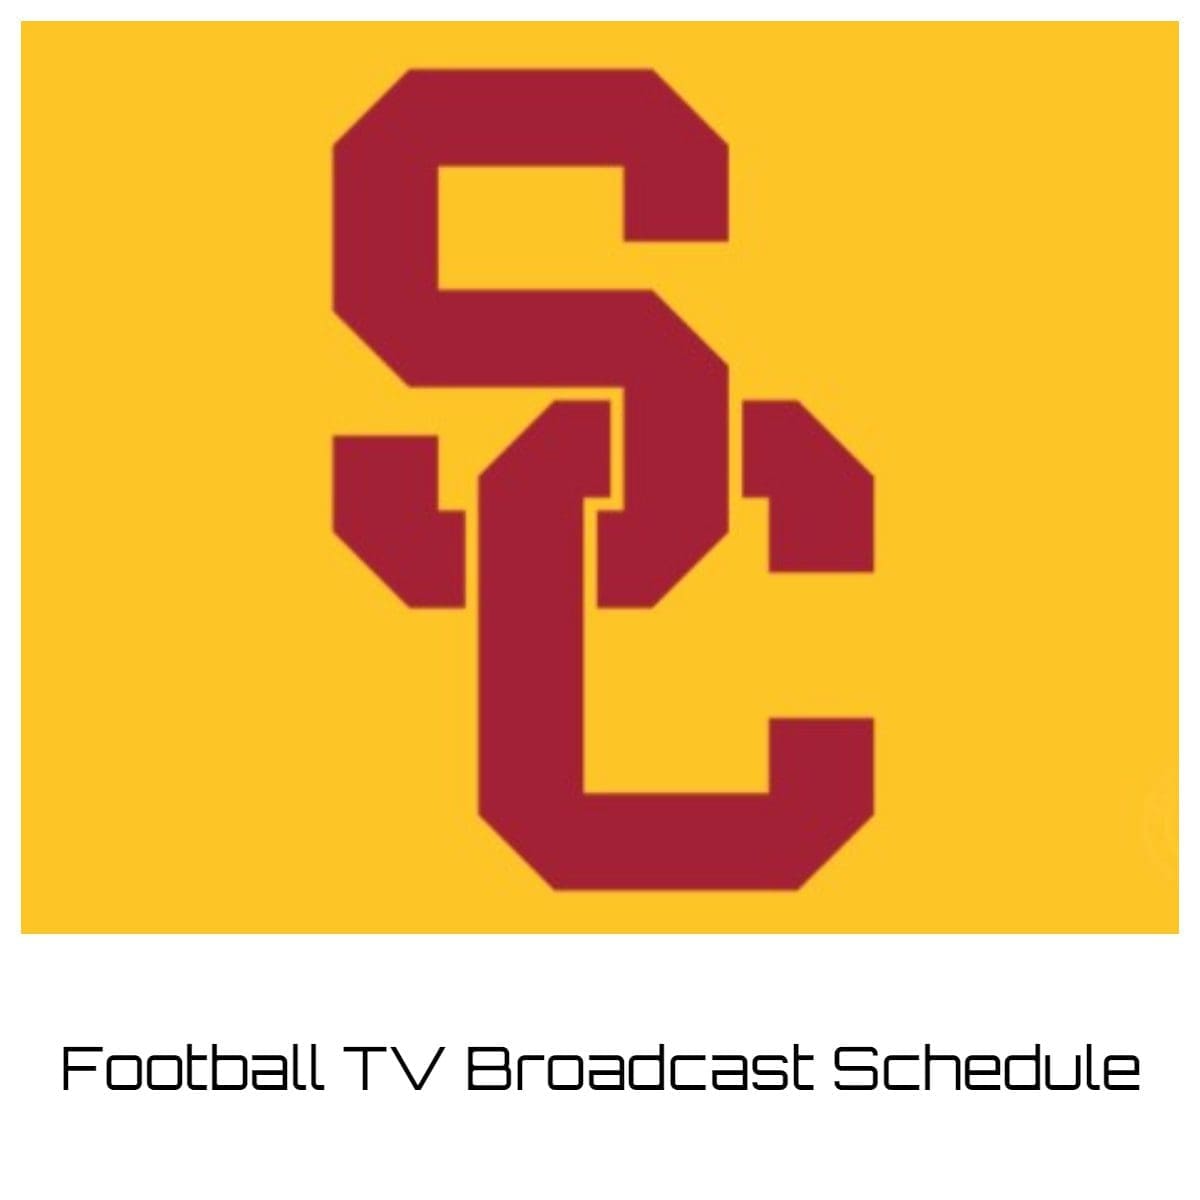 USC Trojans Football TV Broadcast Schedule